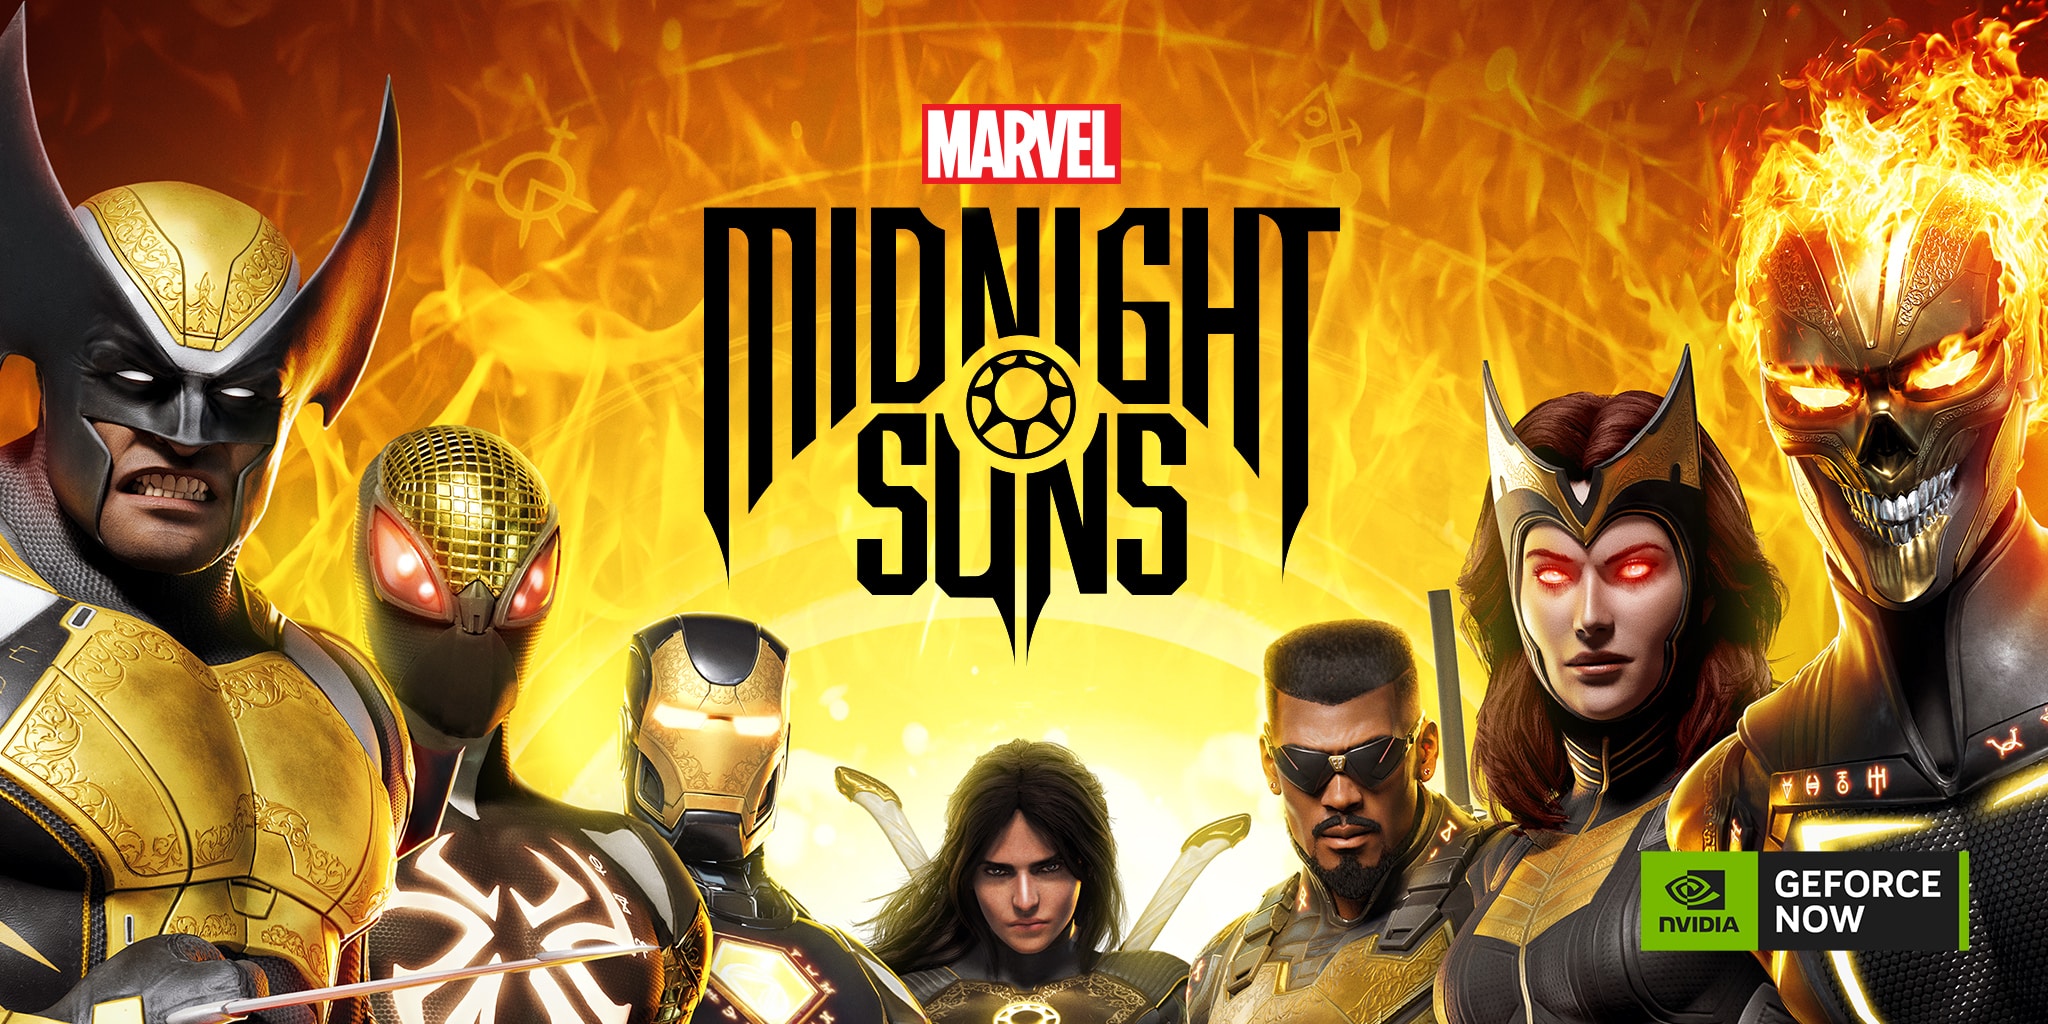 Marvel midnight suns release